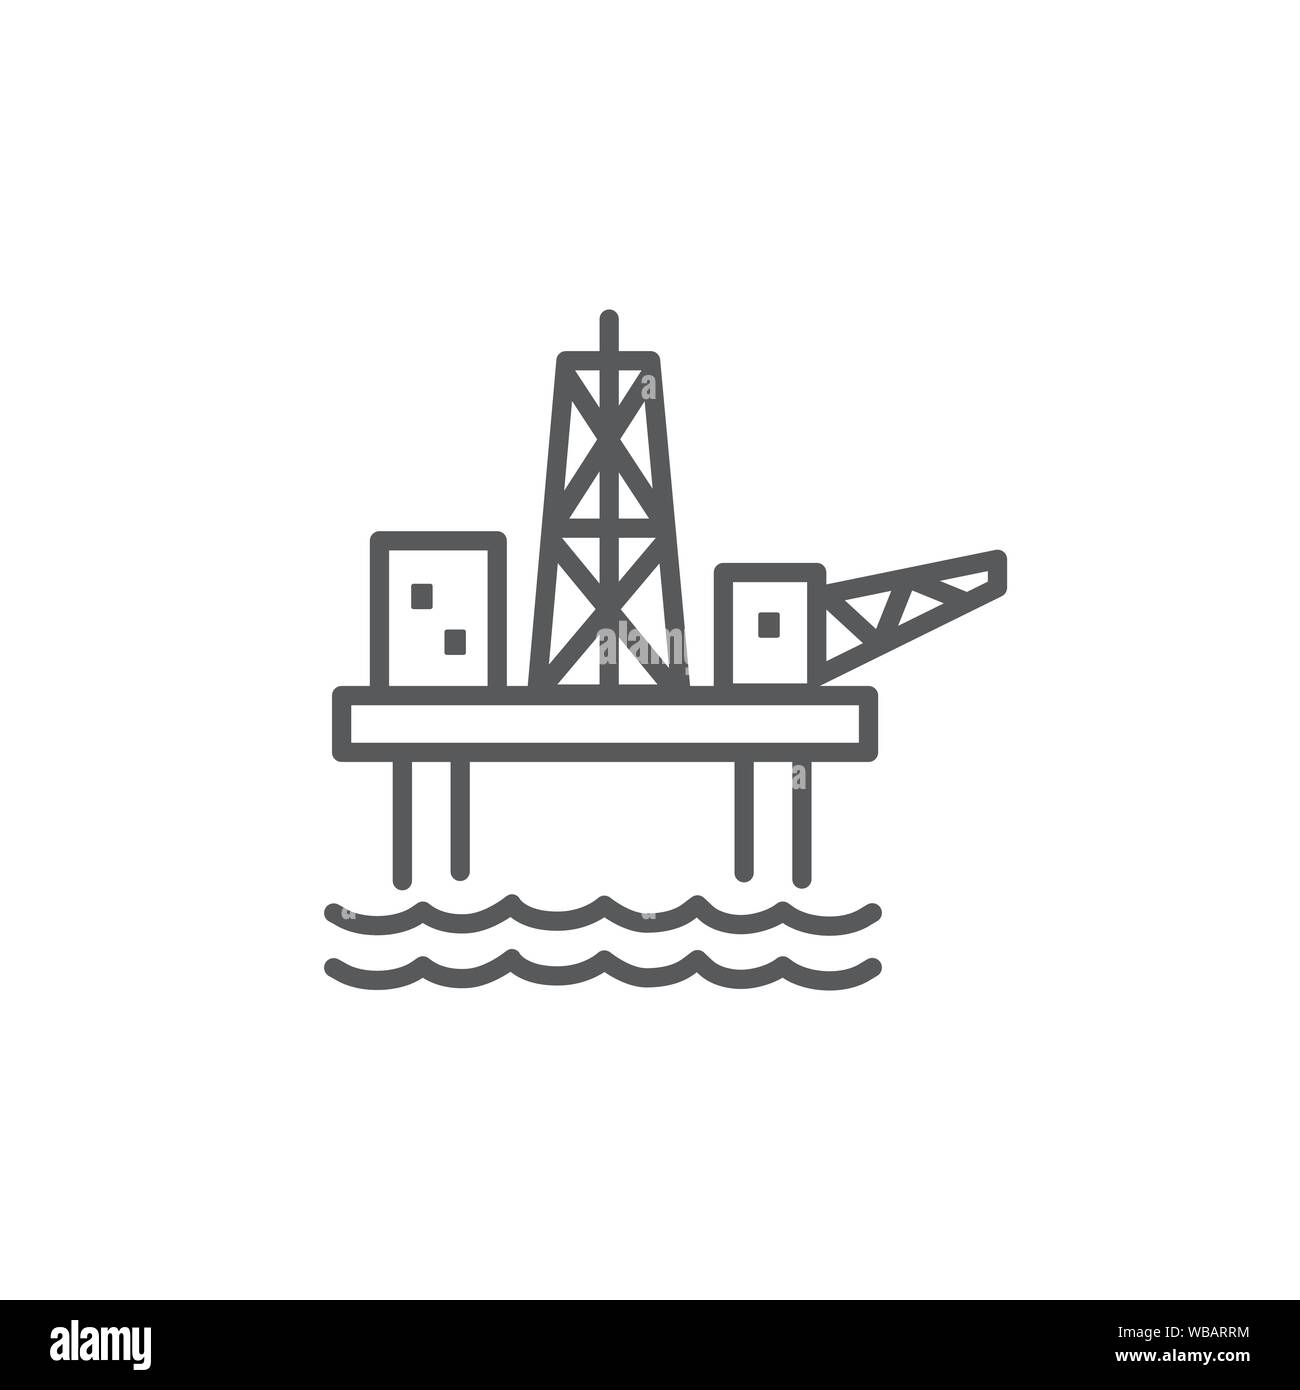 Oil Platform Line Icon on white background Stock Vector